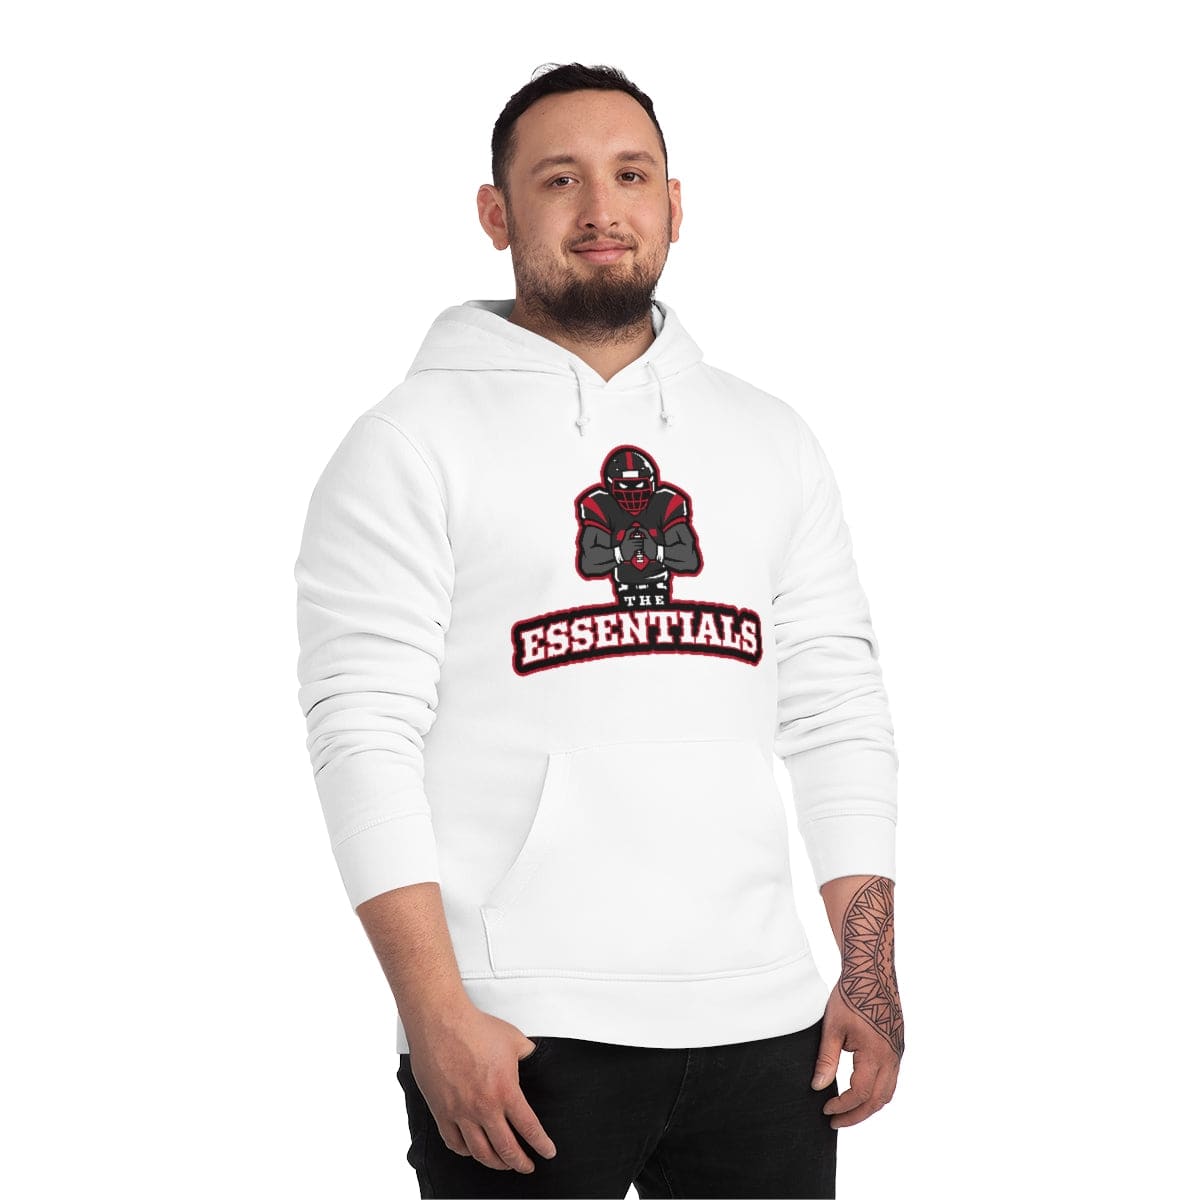 Graphic Hoodie Sweatshirt Football - The Essentials Hooded Shirt - Unisex